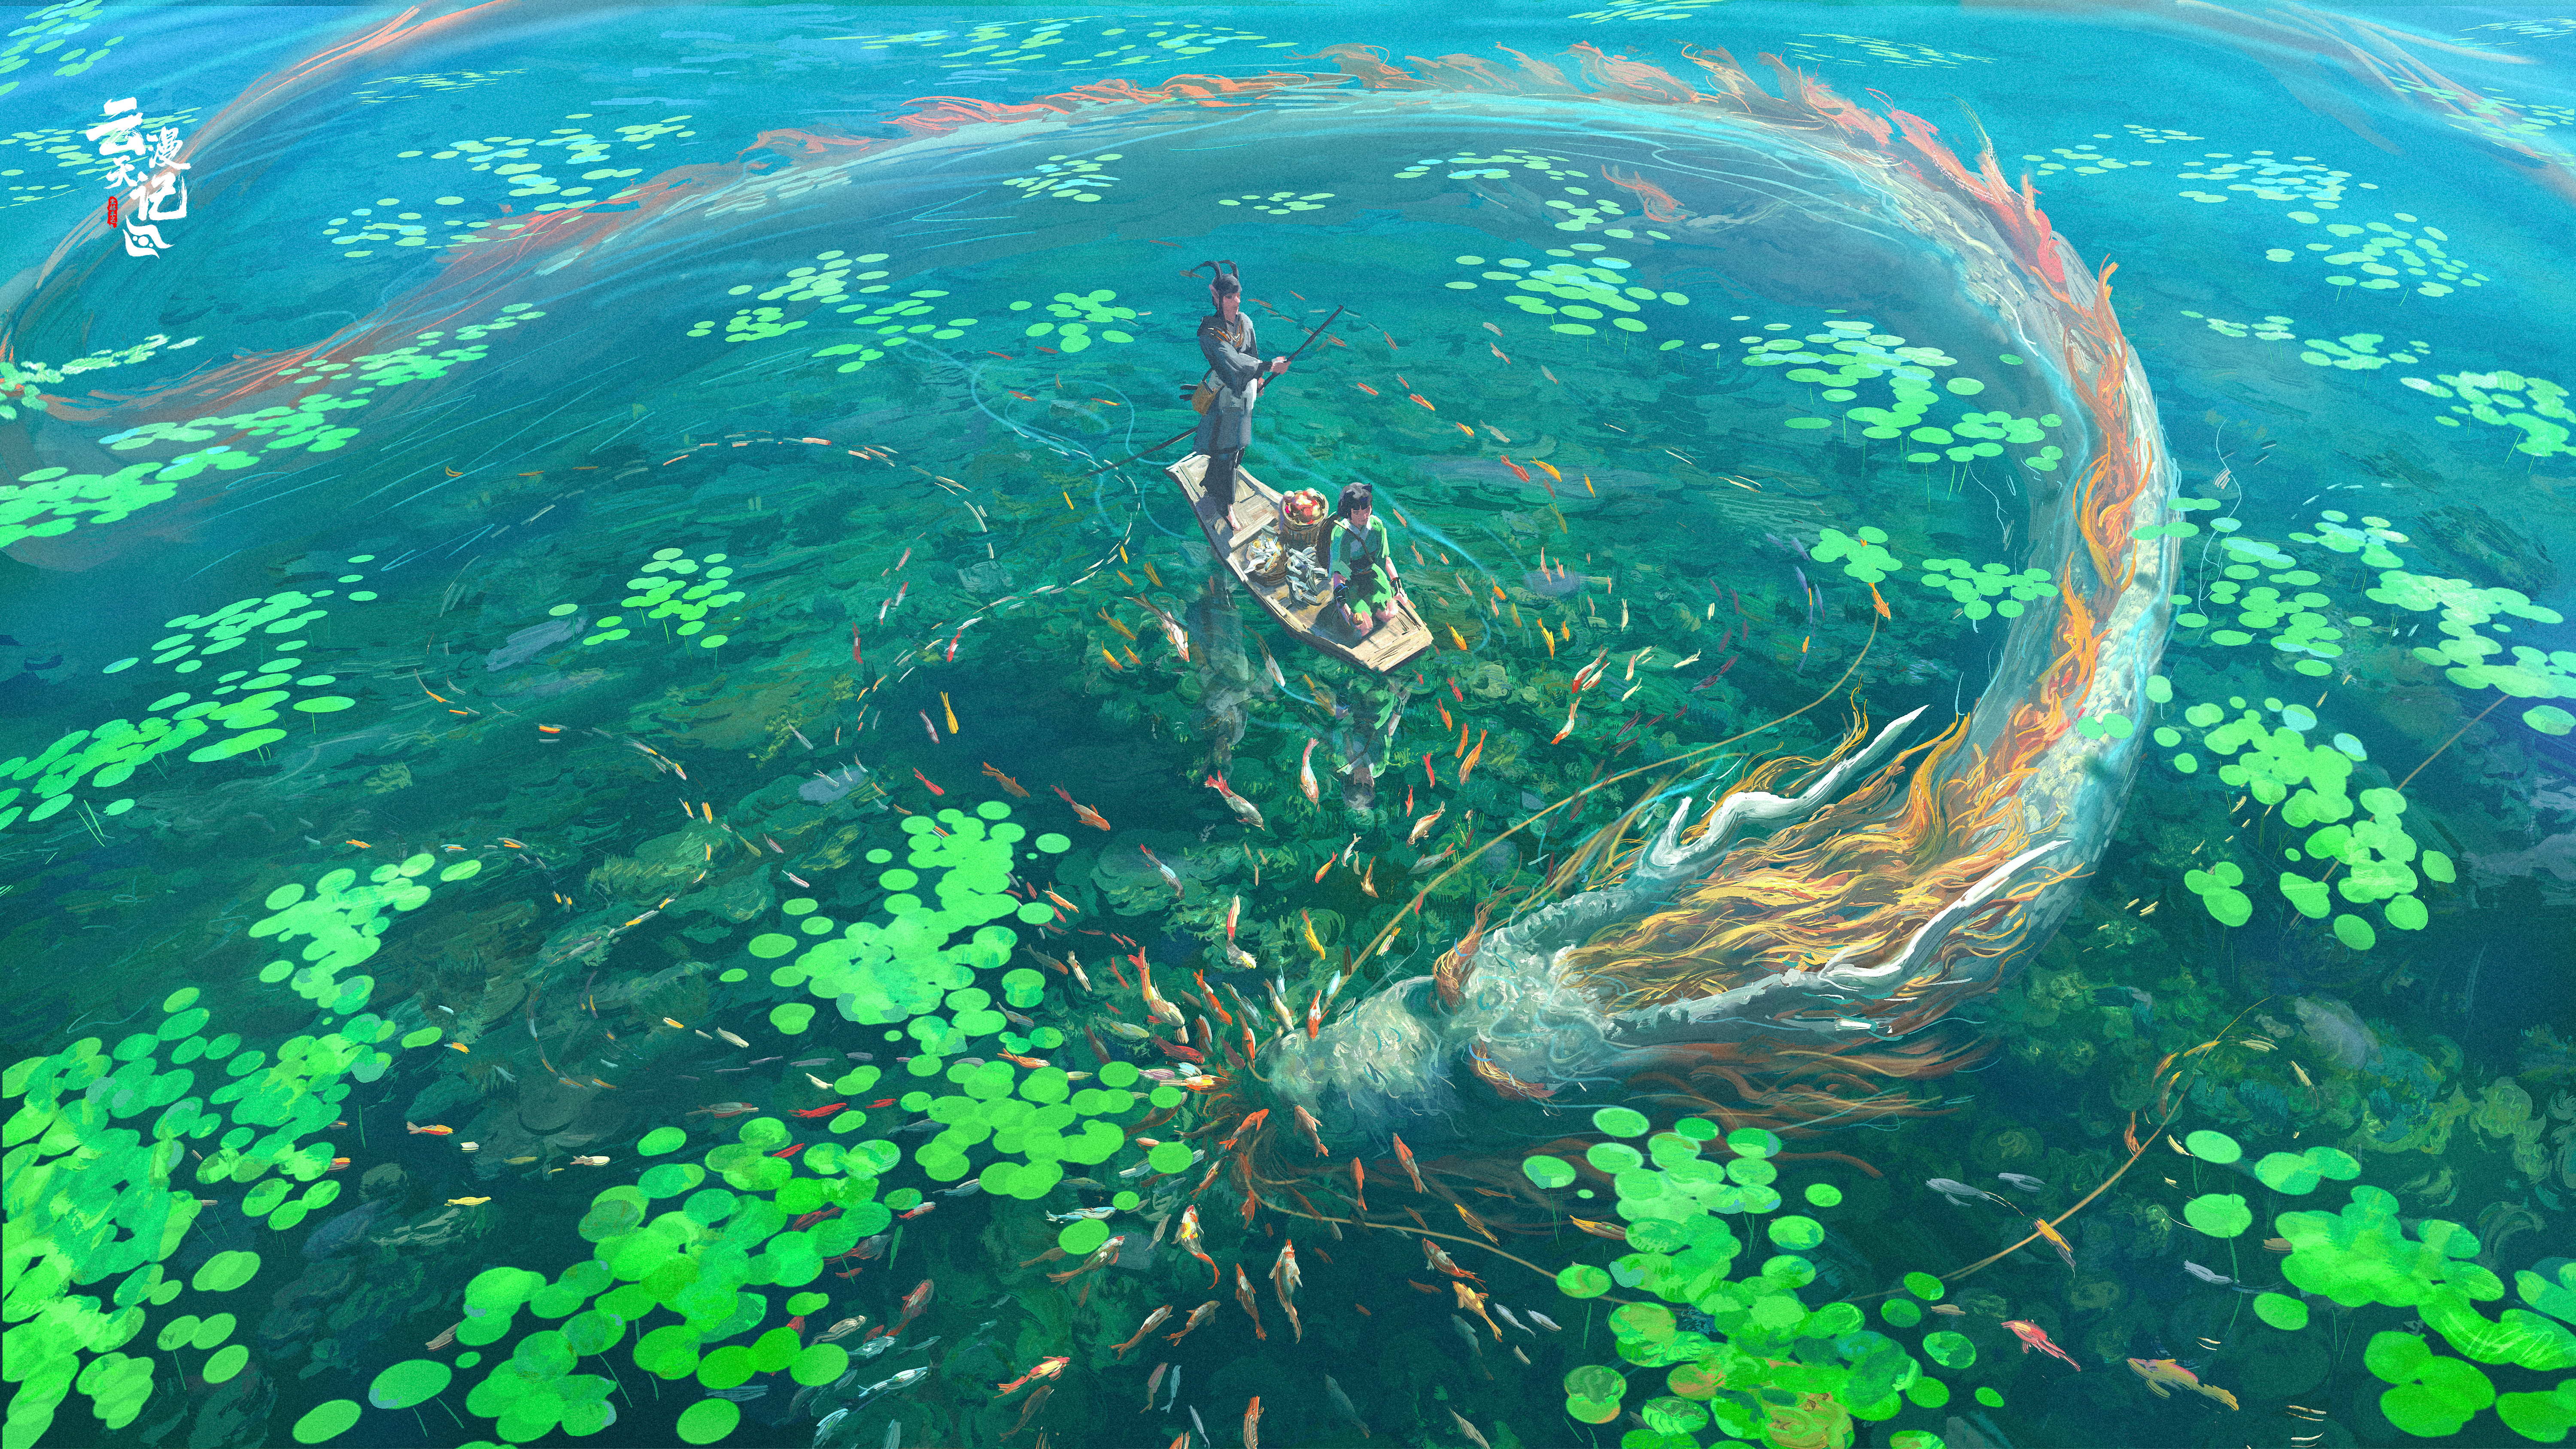 Chibaolin Digital Art Artwork Illustration Fantasy Art Boat Water Dragon Nenuphar Plants Watermarked 6000x3375